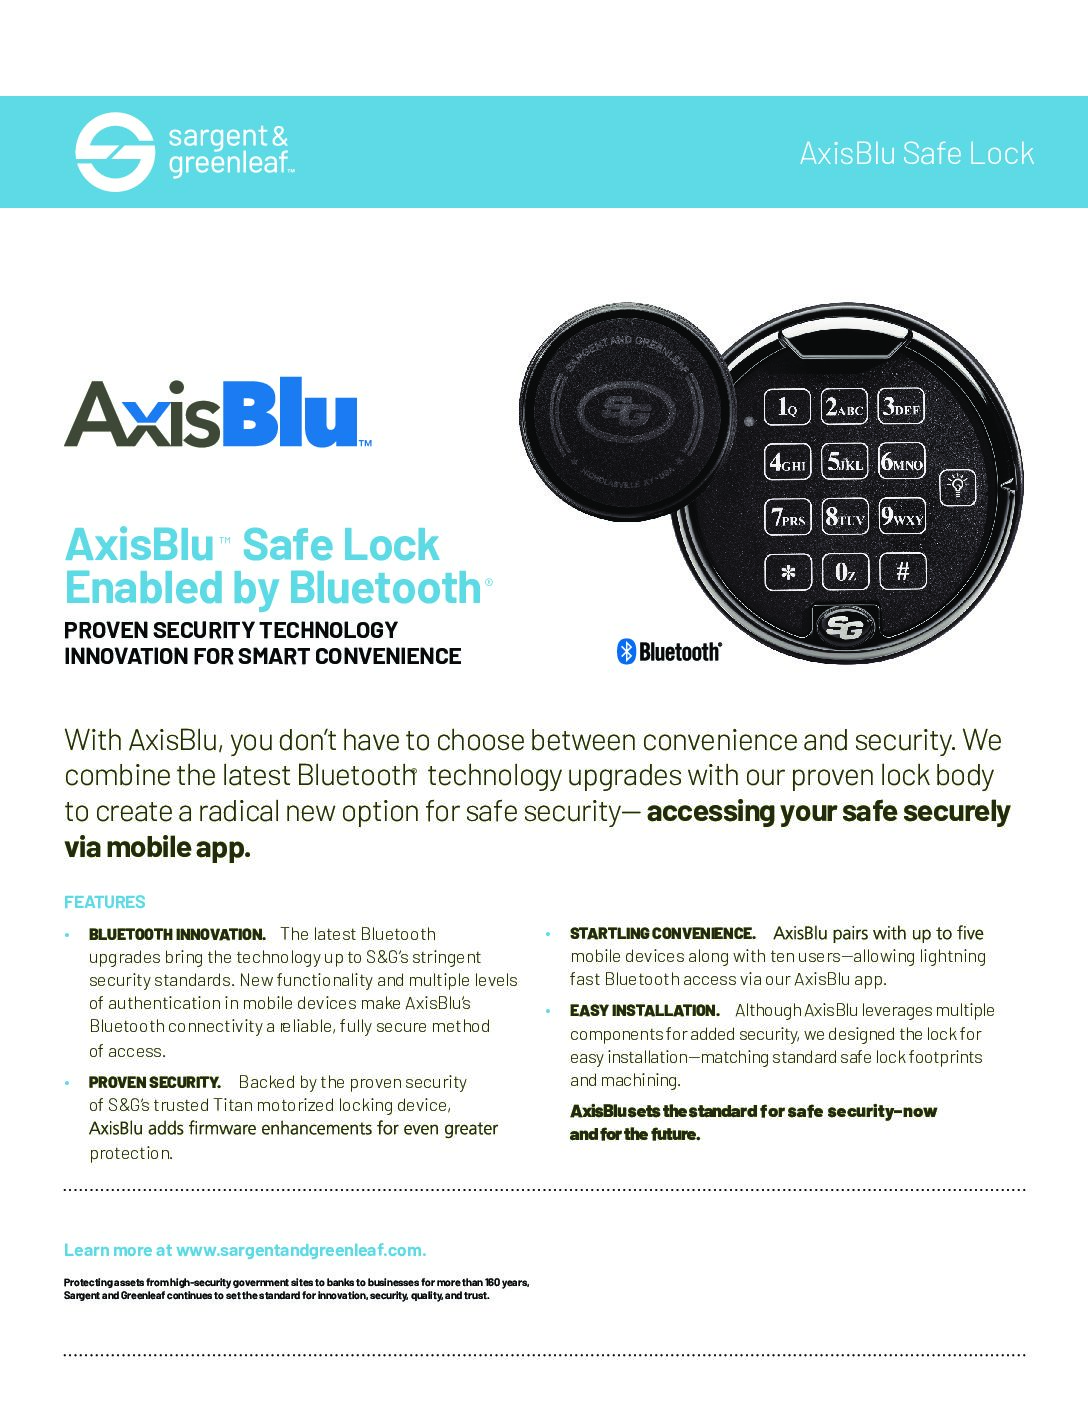 AxisBlu™ Sell Sheet